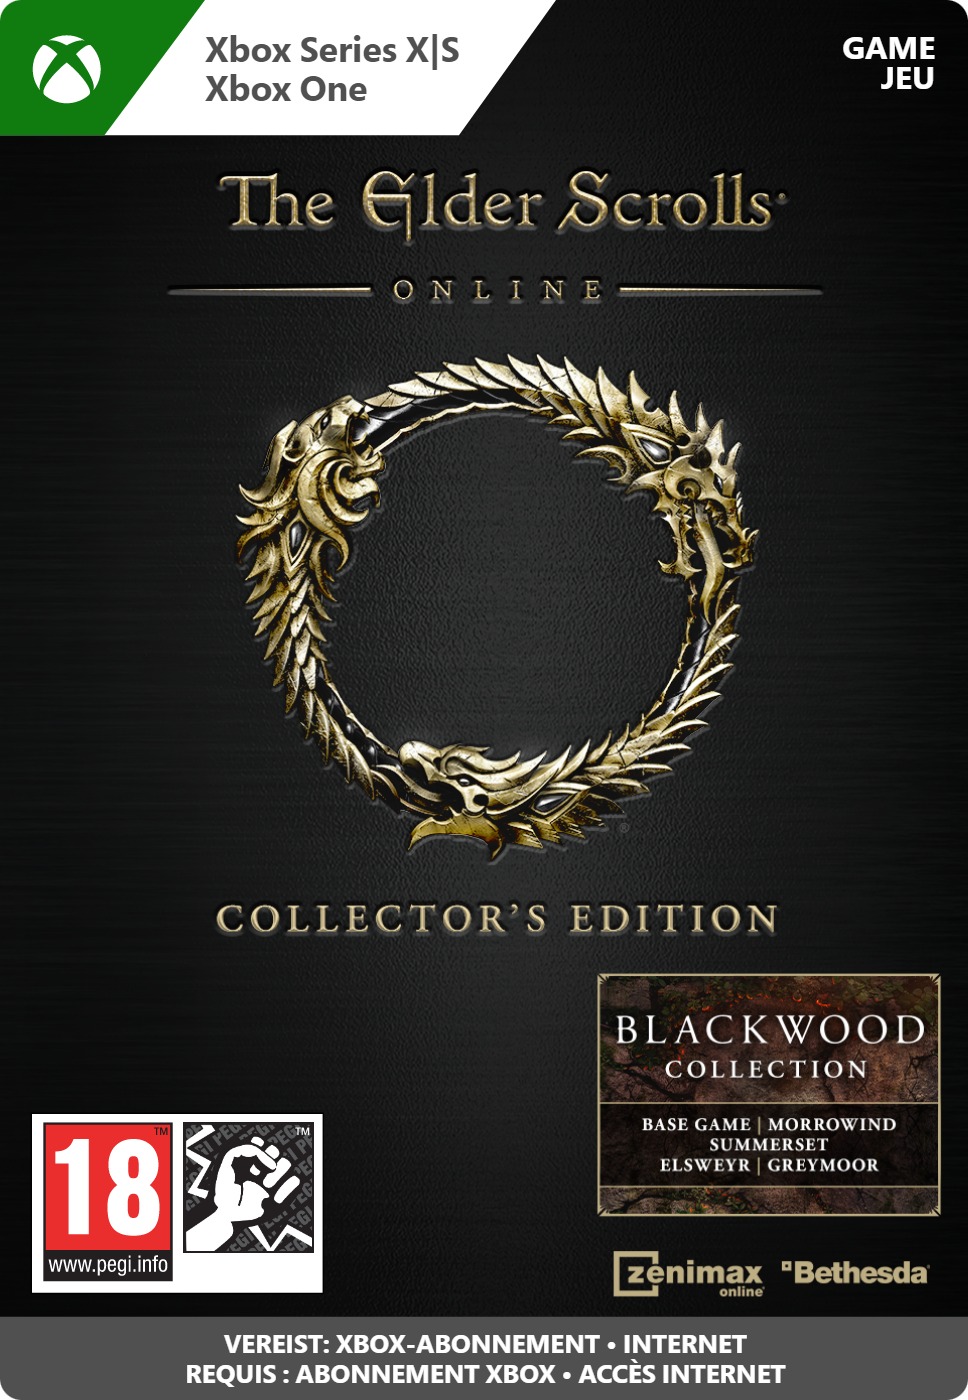 eso collection blackwood collector edition xbox